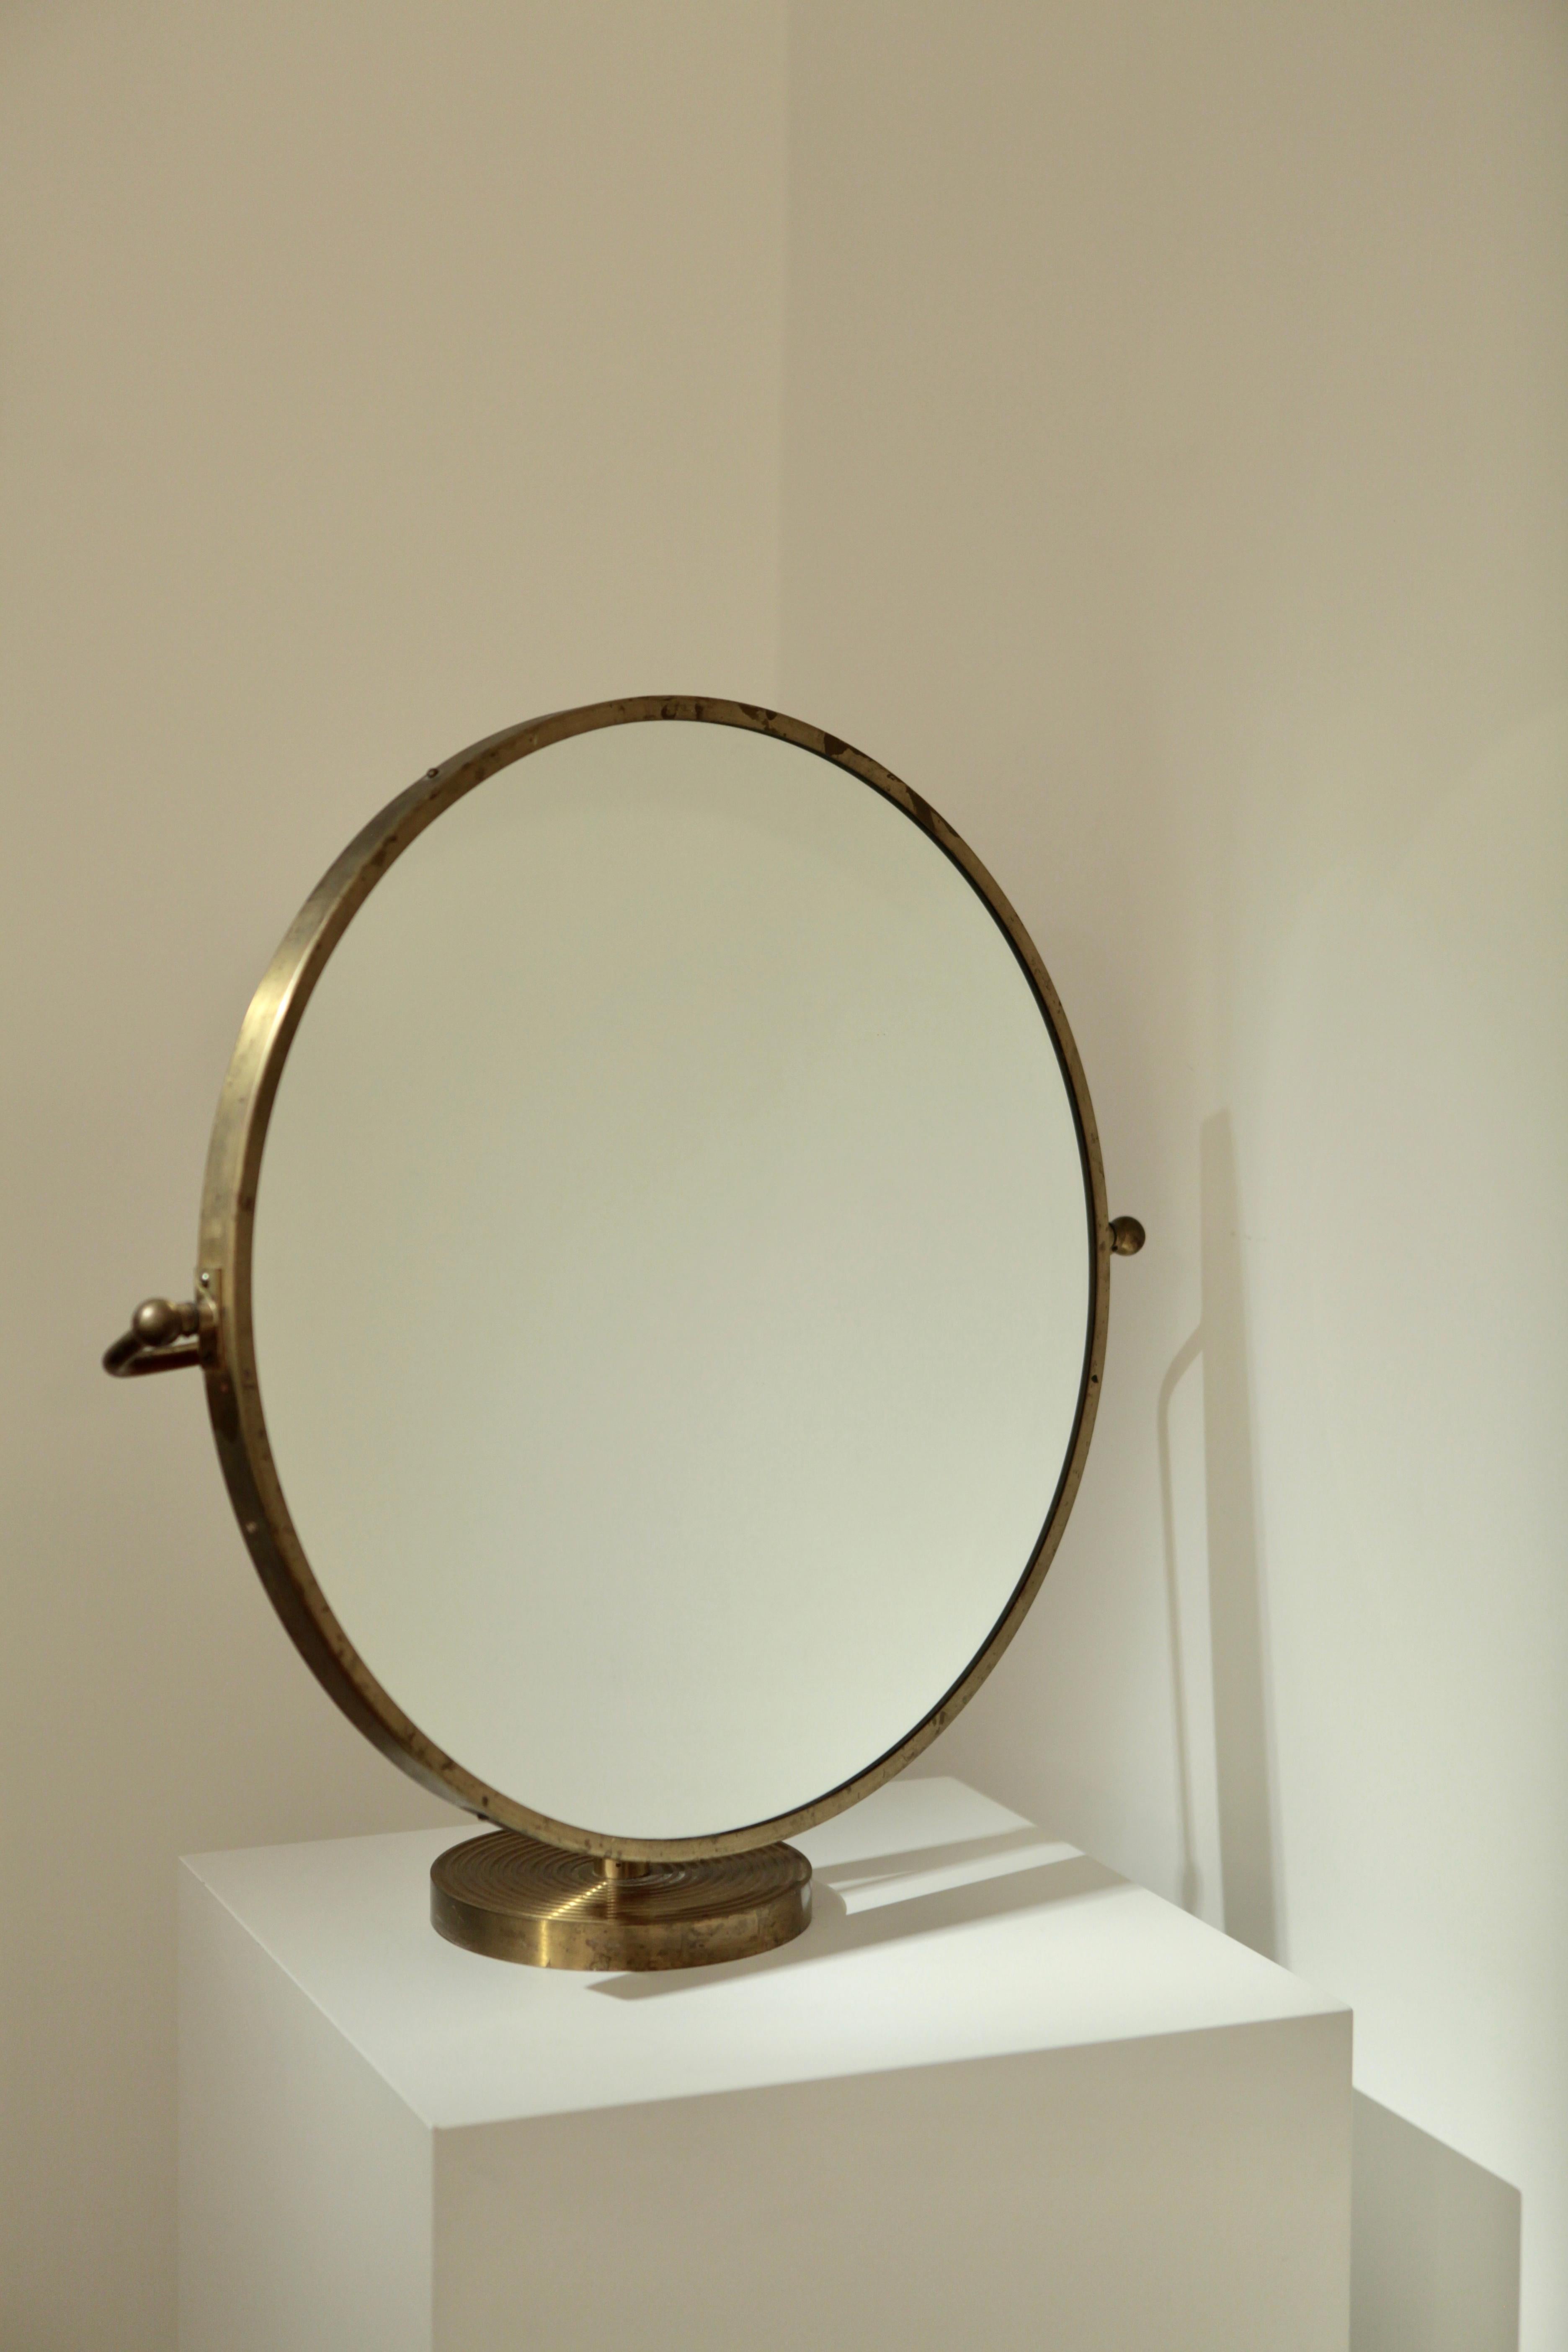 Brass Josef Frank, 'Table Mirror' Svenskt Tenn, Sweden, 1934